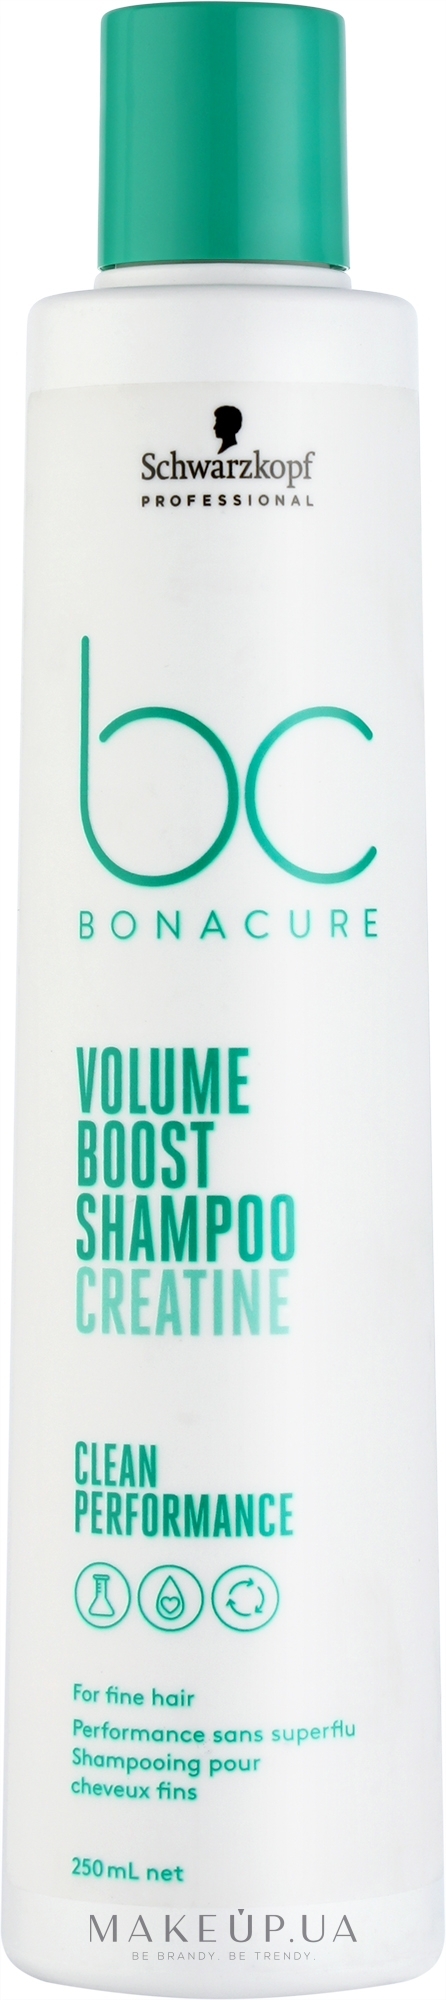 Шампунь для тонких волос - Schwarzkopf Professional Bonacure Volume Boost Shampoo Ceratine — фото 250ml